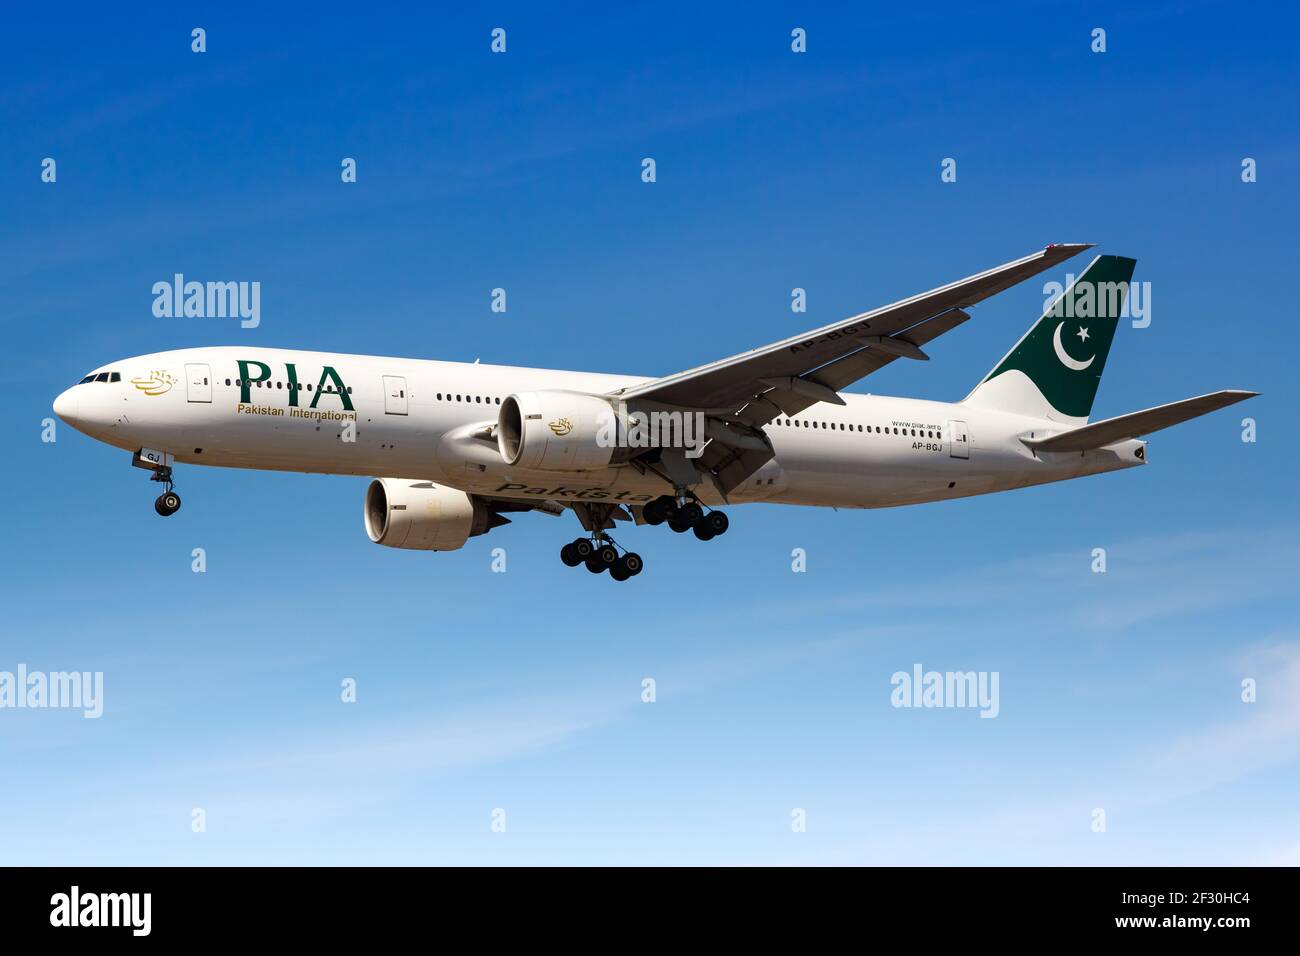 London, United Kingdom - August 1, 2018: PIA Pakistan International Boeing 777 airplane at London Heathrow airport (LHR) in the United Kingdom. Stock Photo